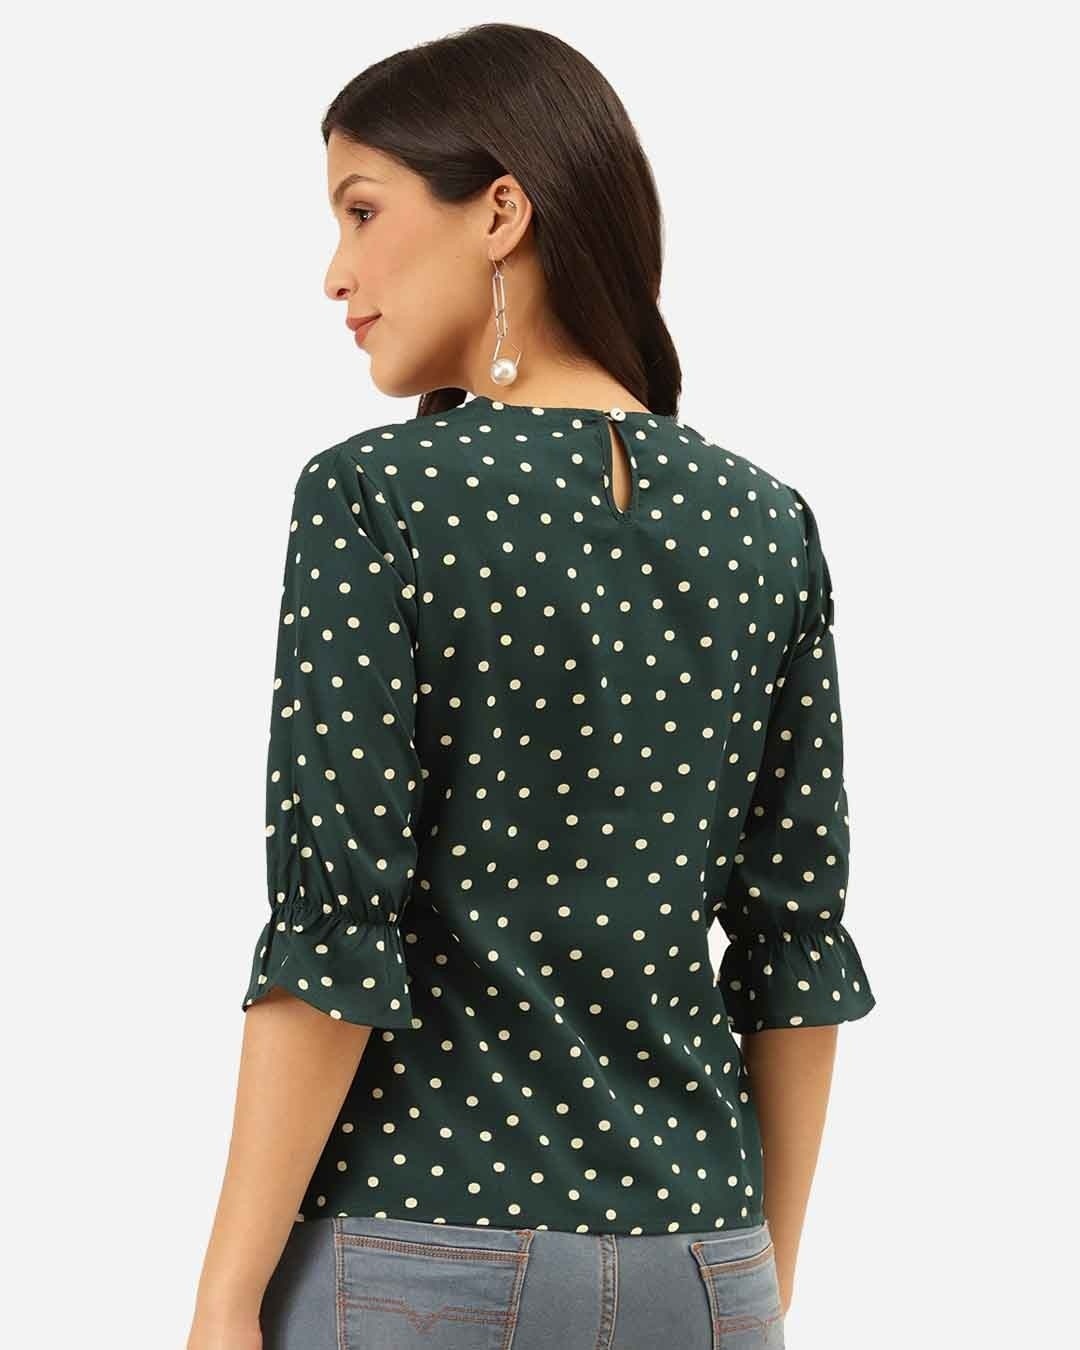 Shop Women's Green & White Polka Dot Print Regular Top-Design